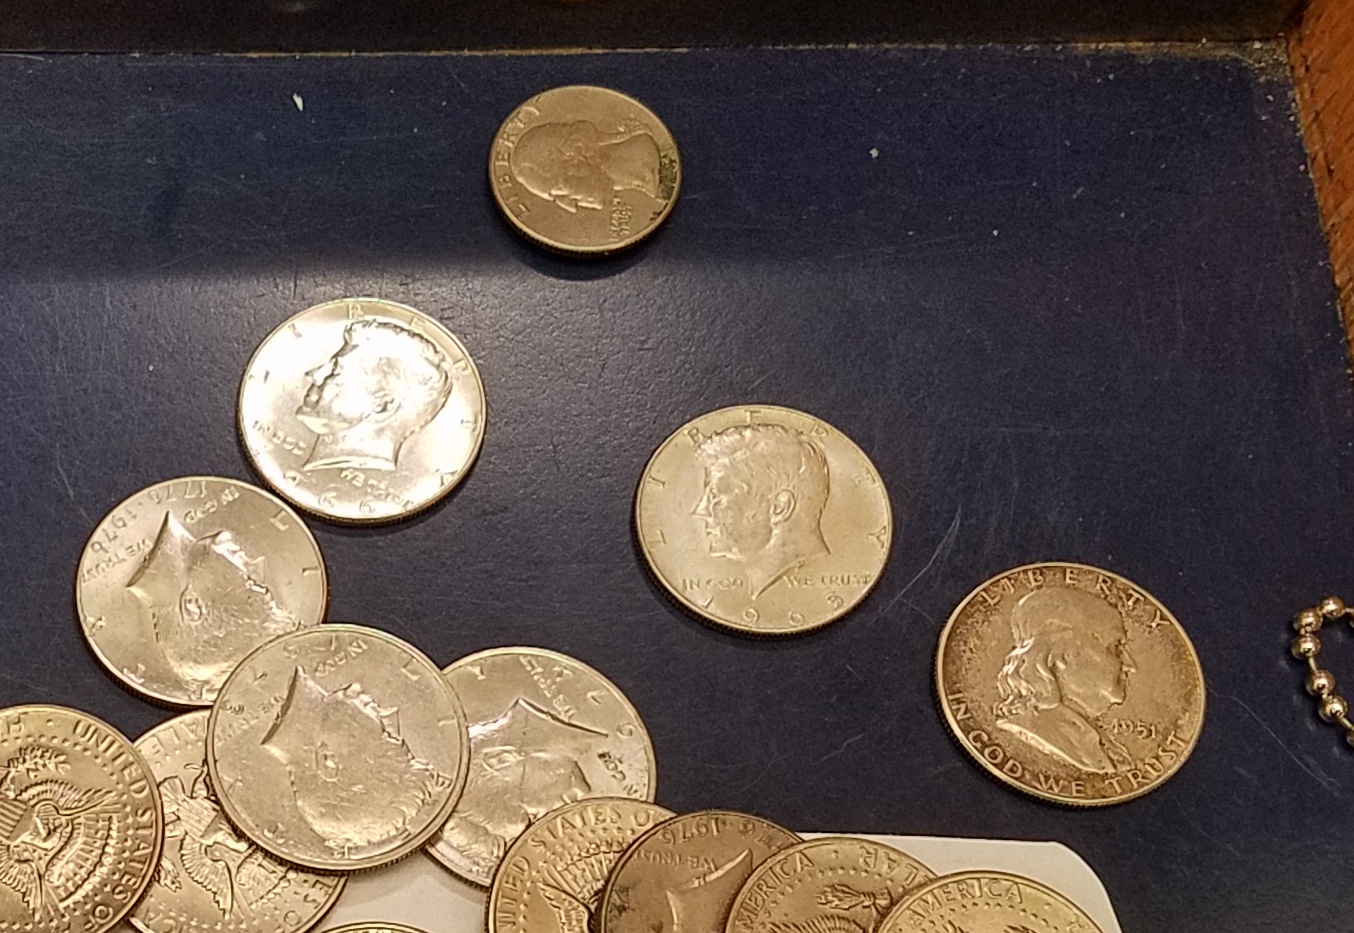 Coins_gotten-at-bank-12-14-2018_zoom.jpg